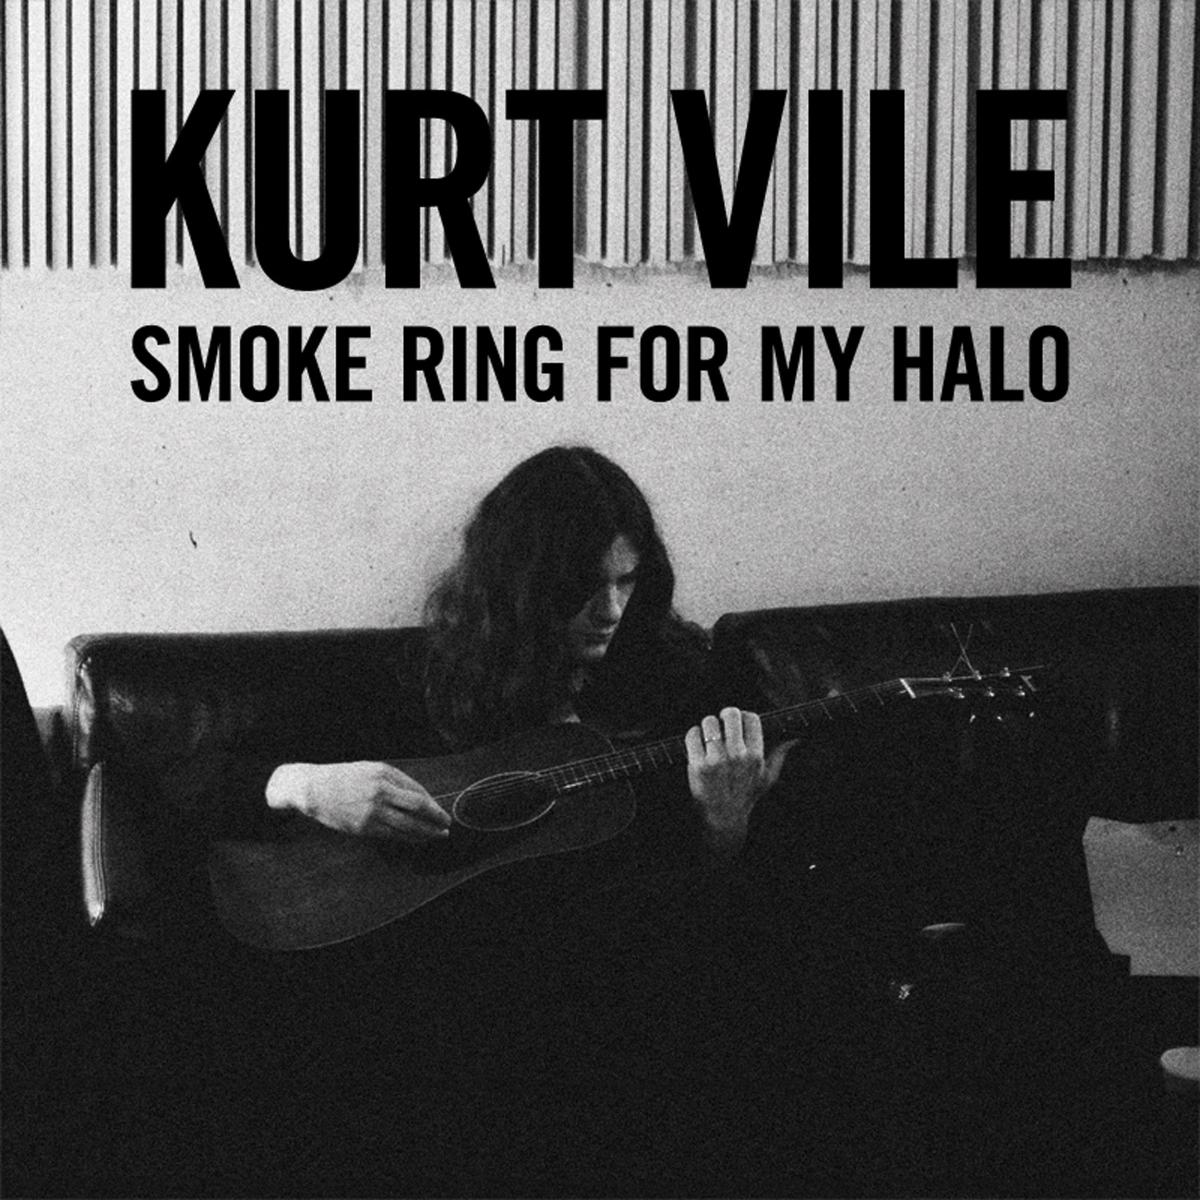 Vile, Kurt - Smoke Ring for My Halo (Digital Download Code)